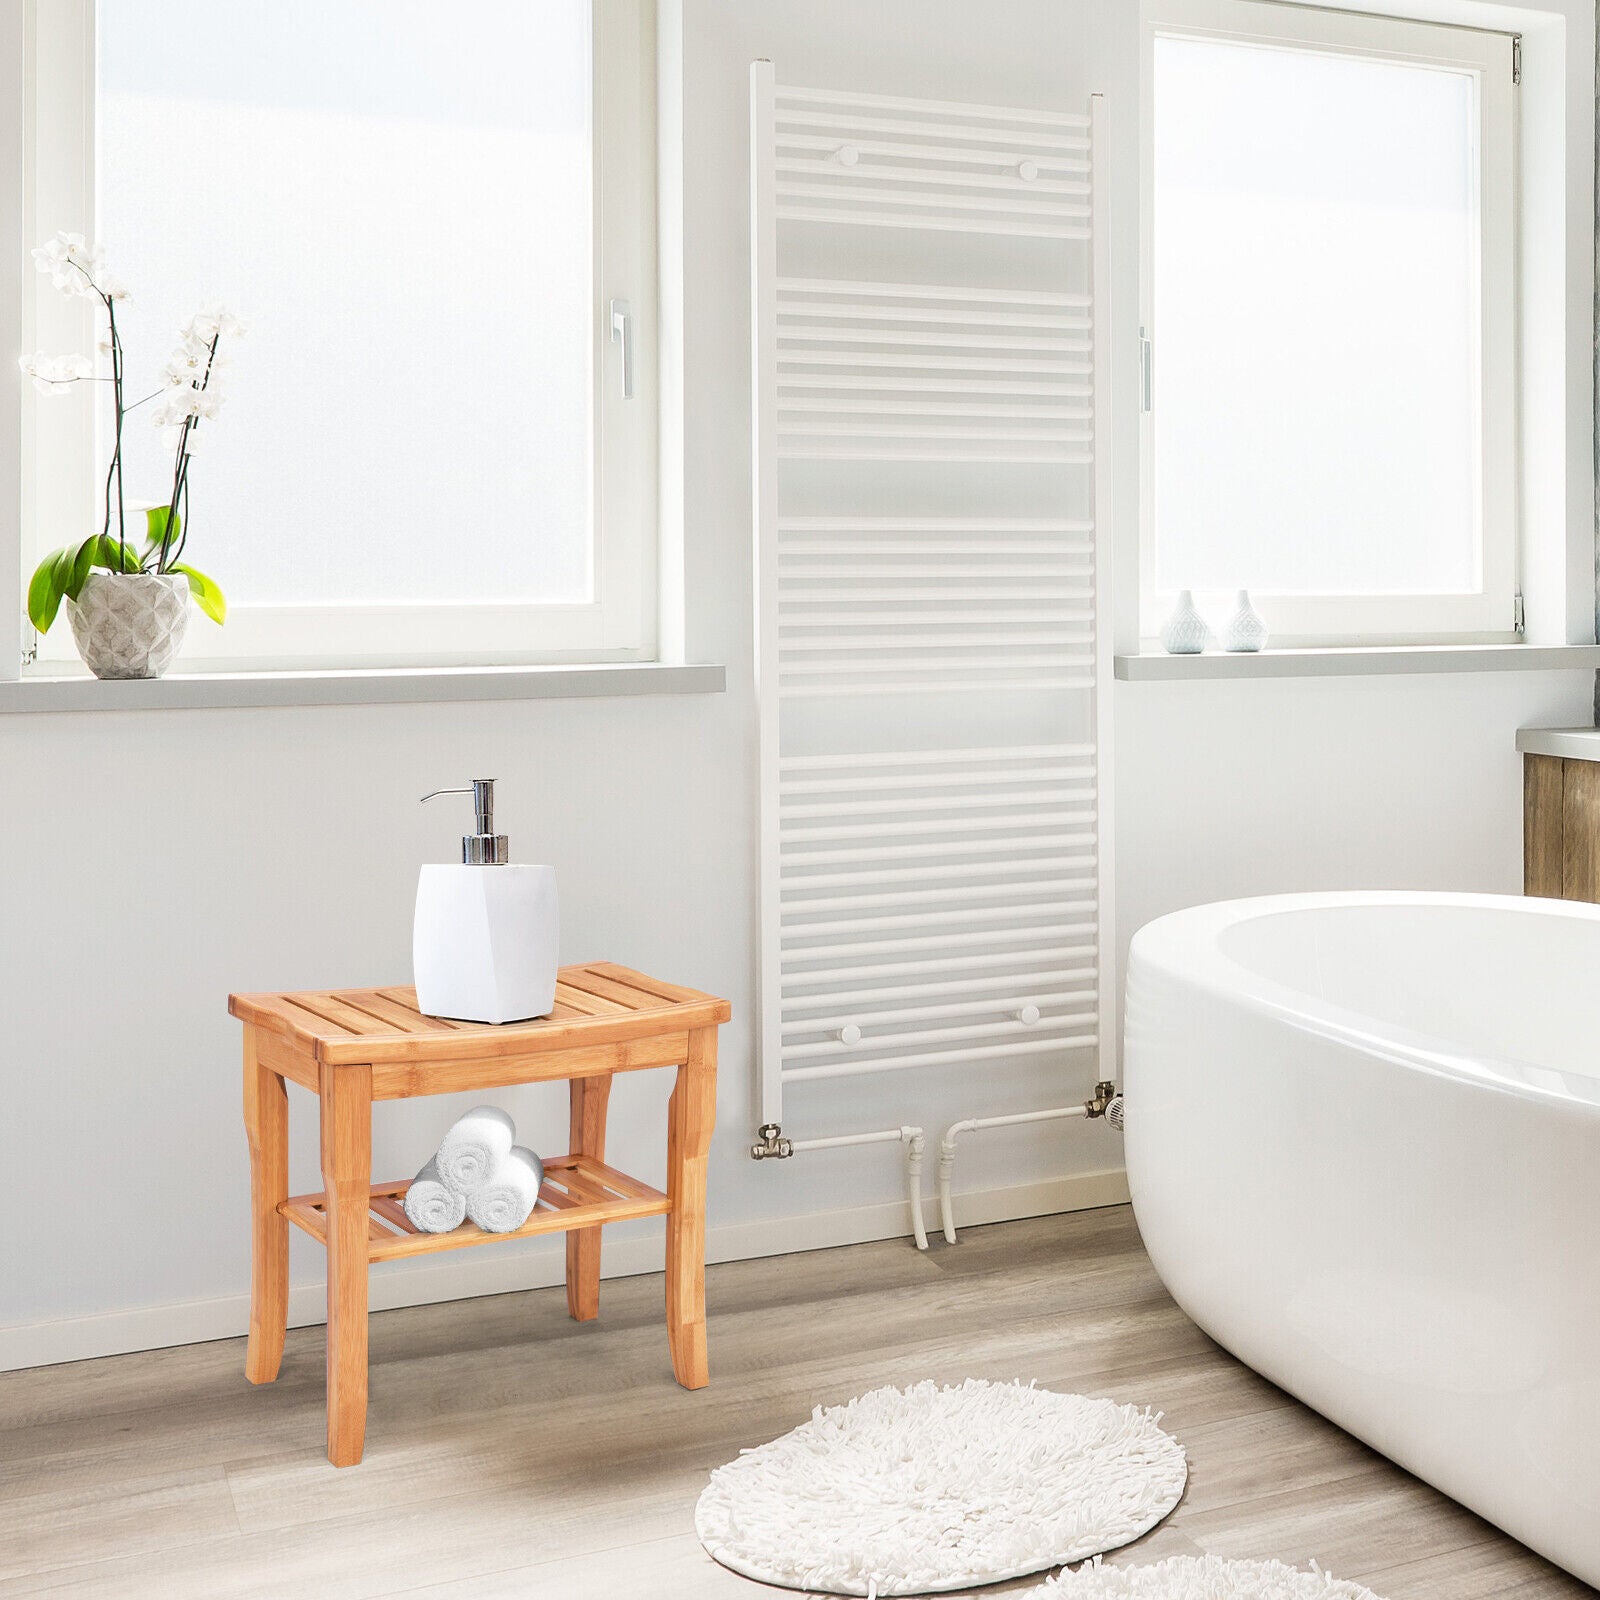 Bamboo Shower Seat Bench Bathroom Spa Organizer Stool With Storage Shelf